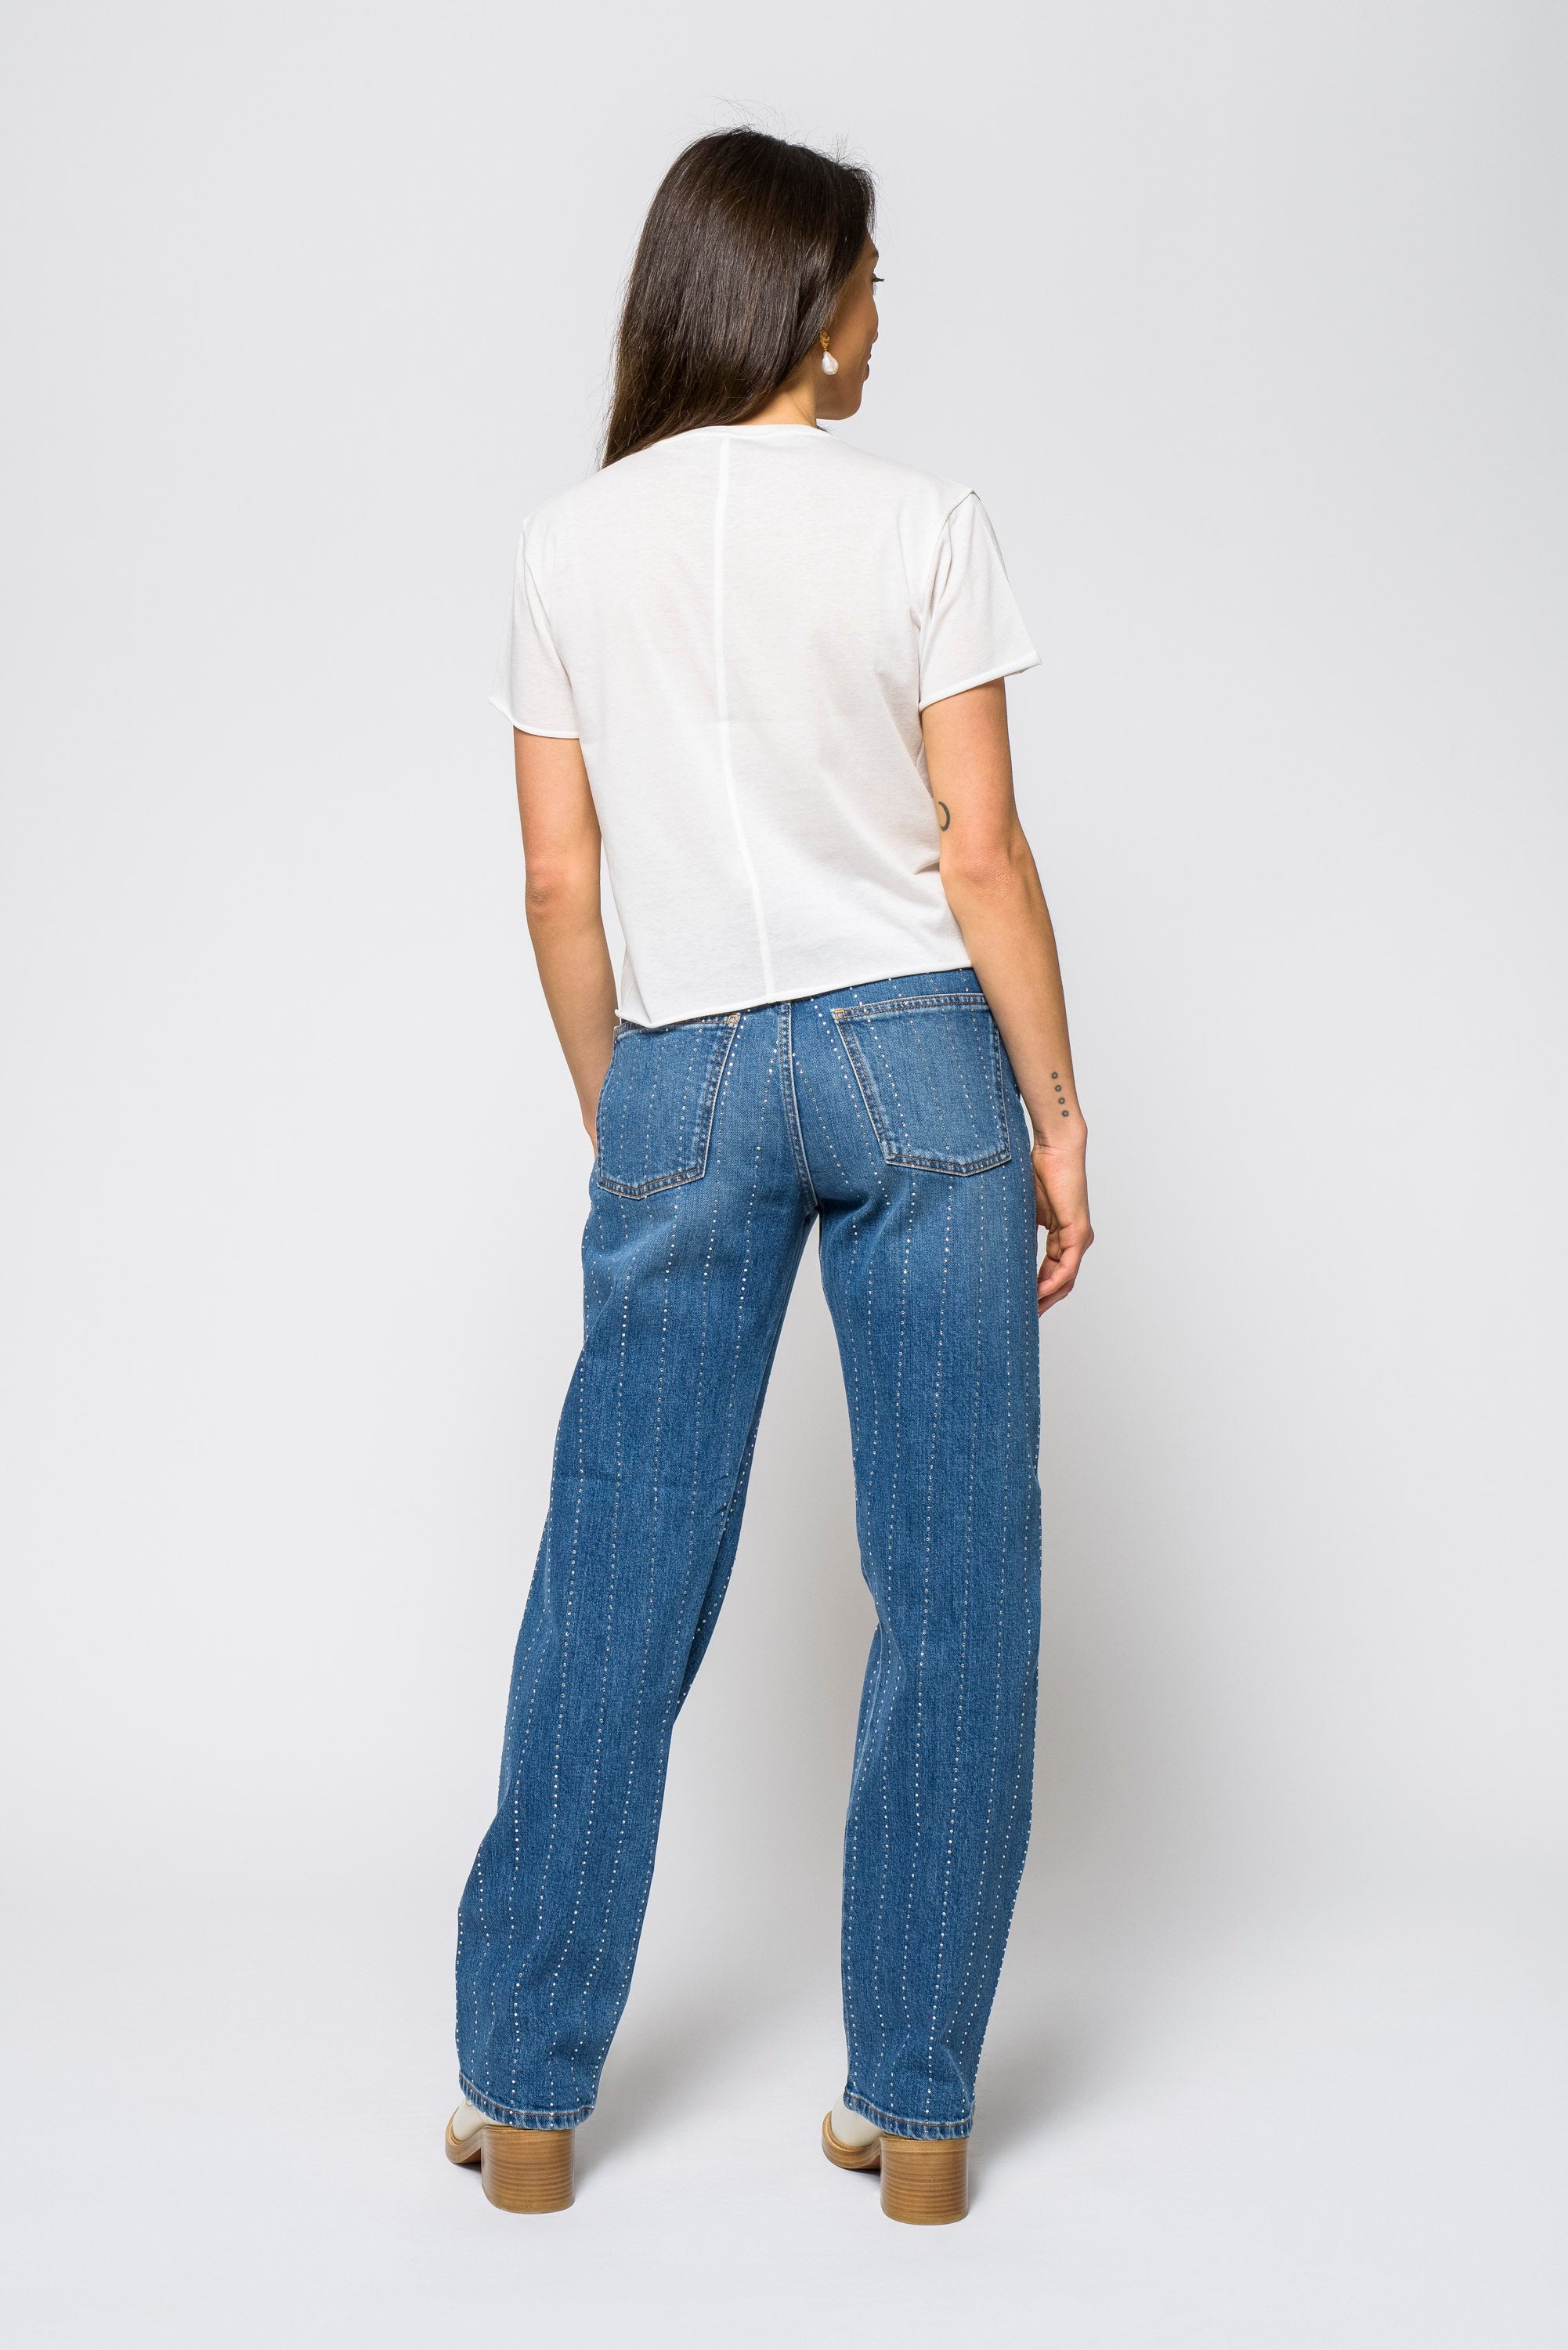 Stella McCartney Indigo Wild Cat Foil Printed Denim Skinny Ankle Jeans -  Choice | eBay